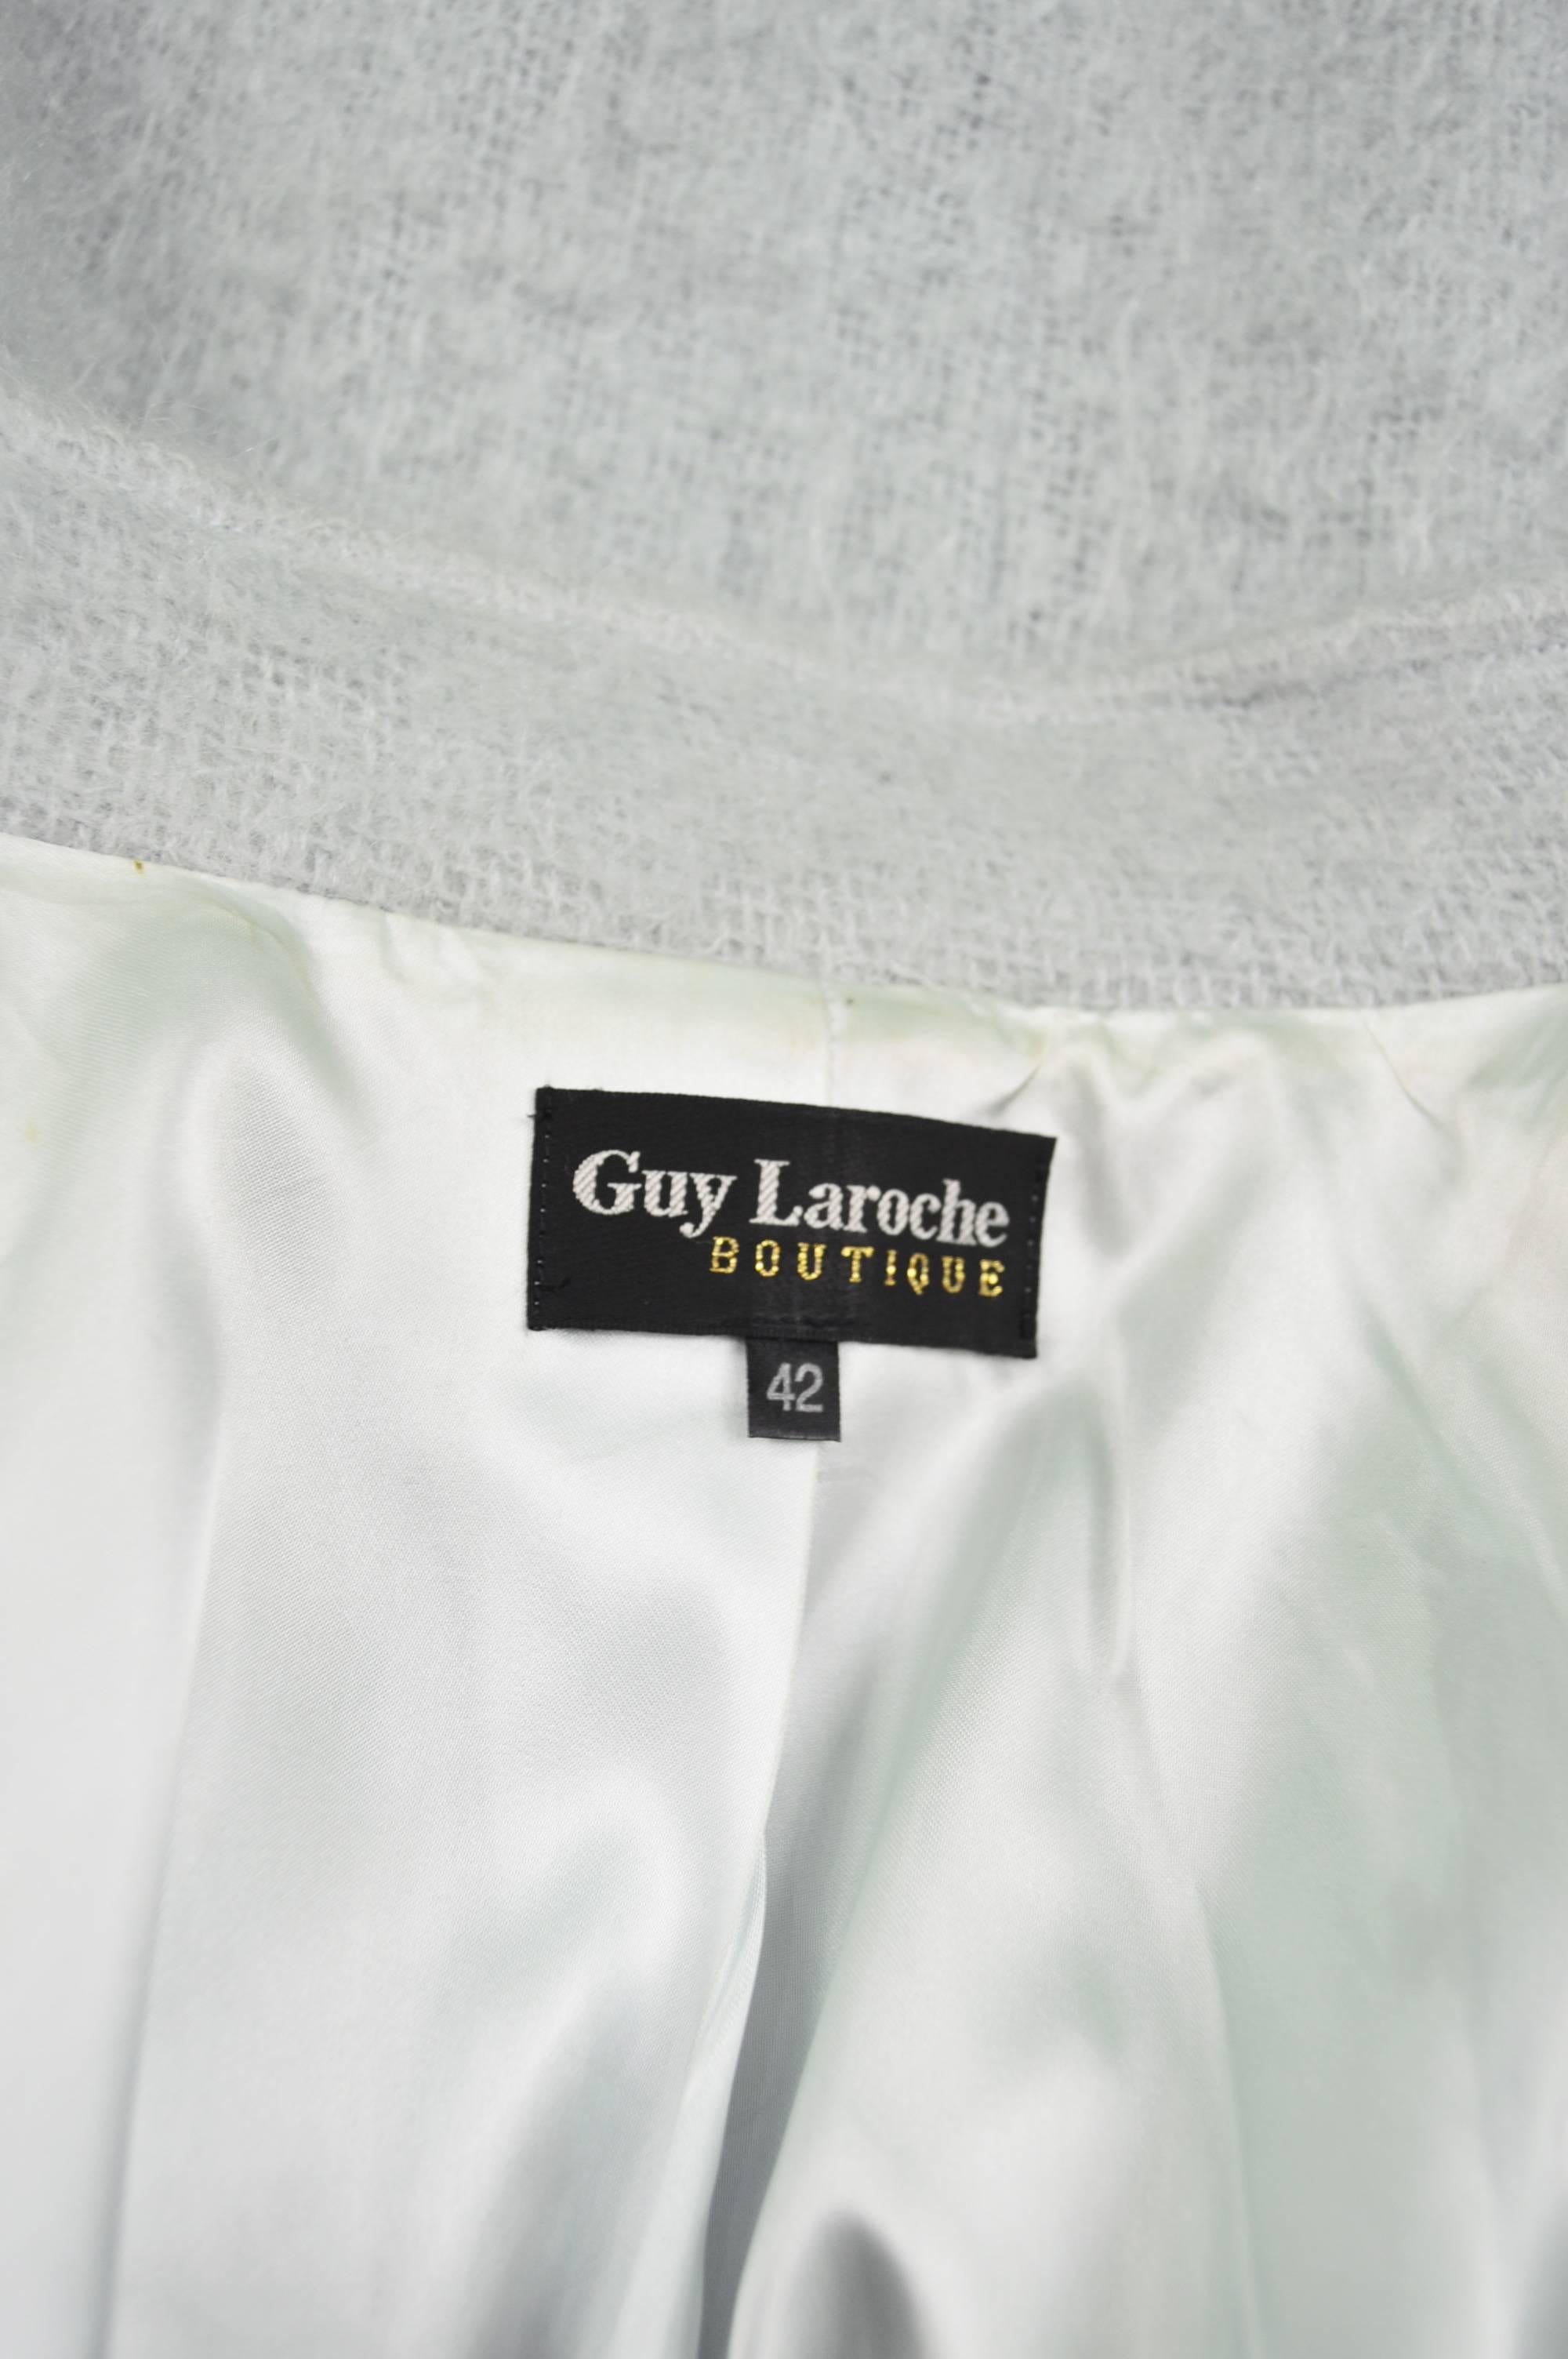 Guy Laroche Boutique Vintage Pale Blue Mohair Wool Swing Coat, 1980s For Sale 3